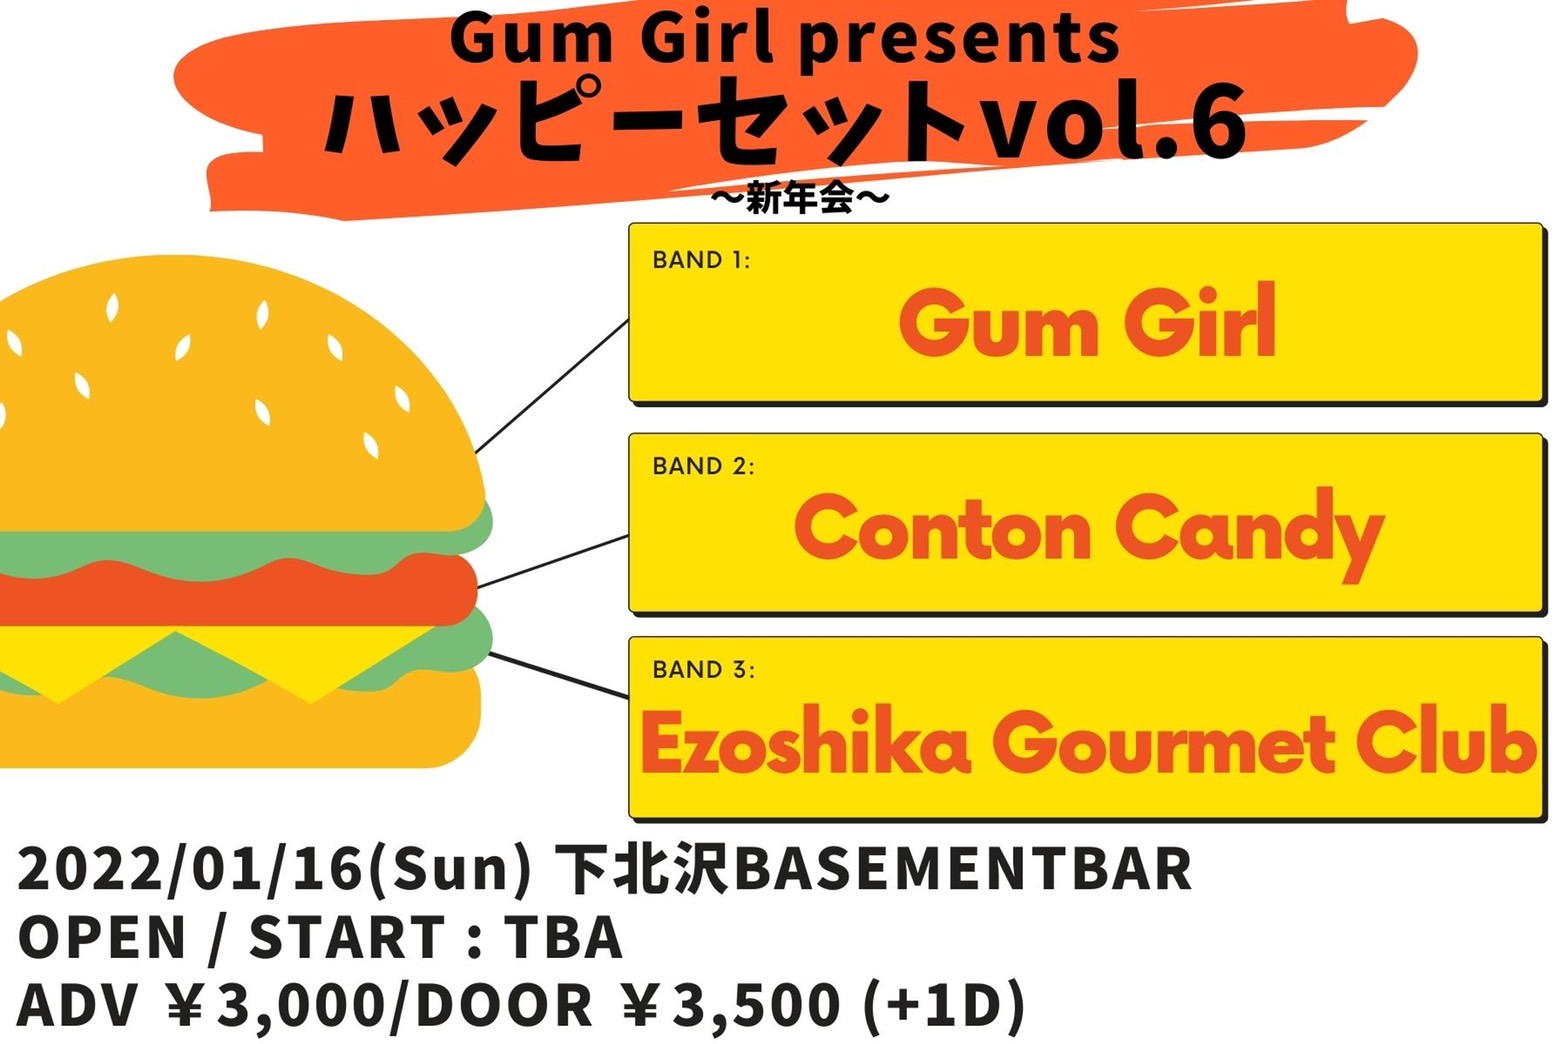 Gum Girl presents 「ハッピーセットvol.6〜新年会〜」